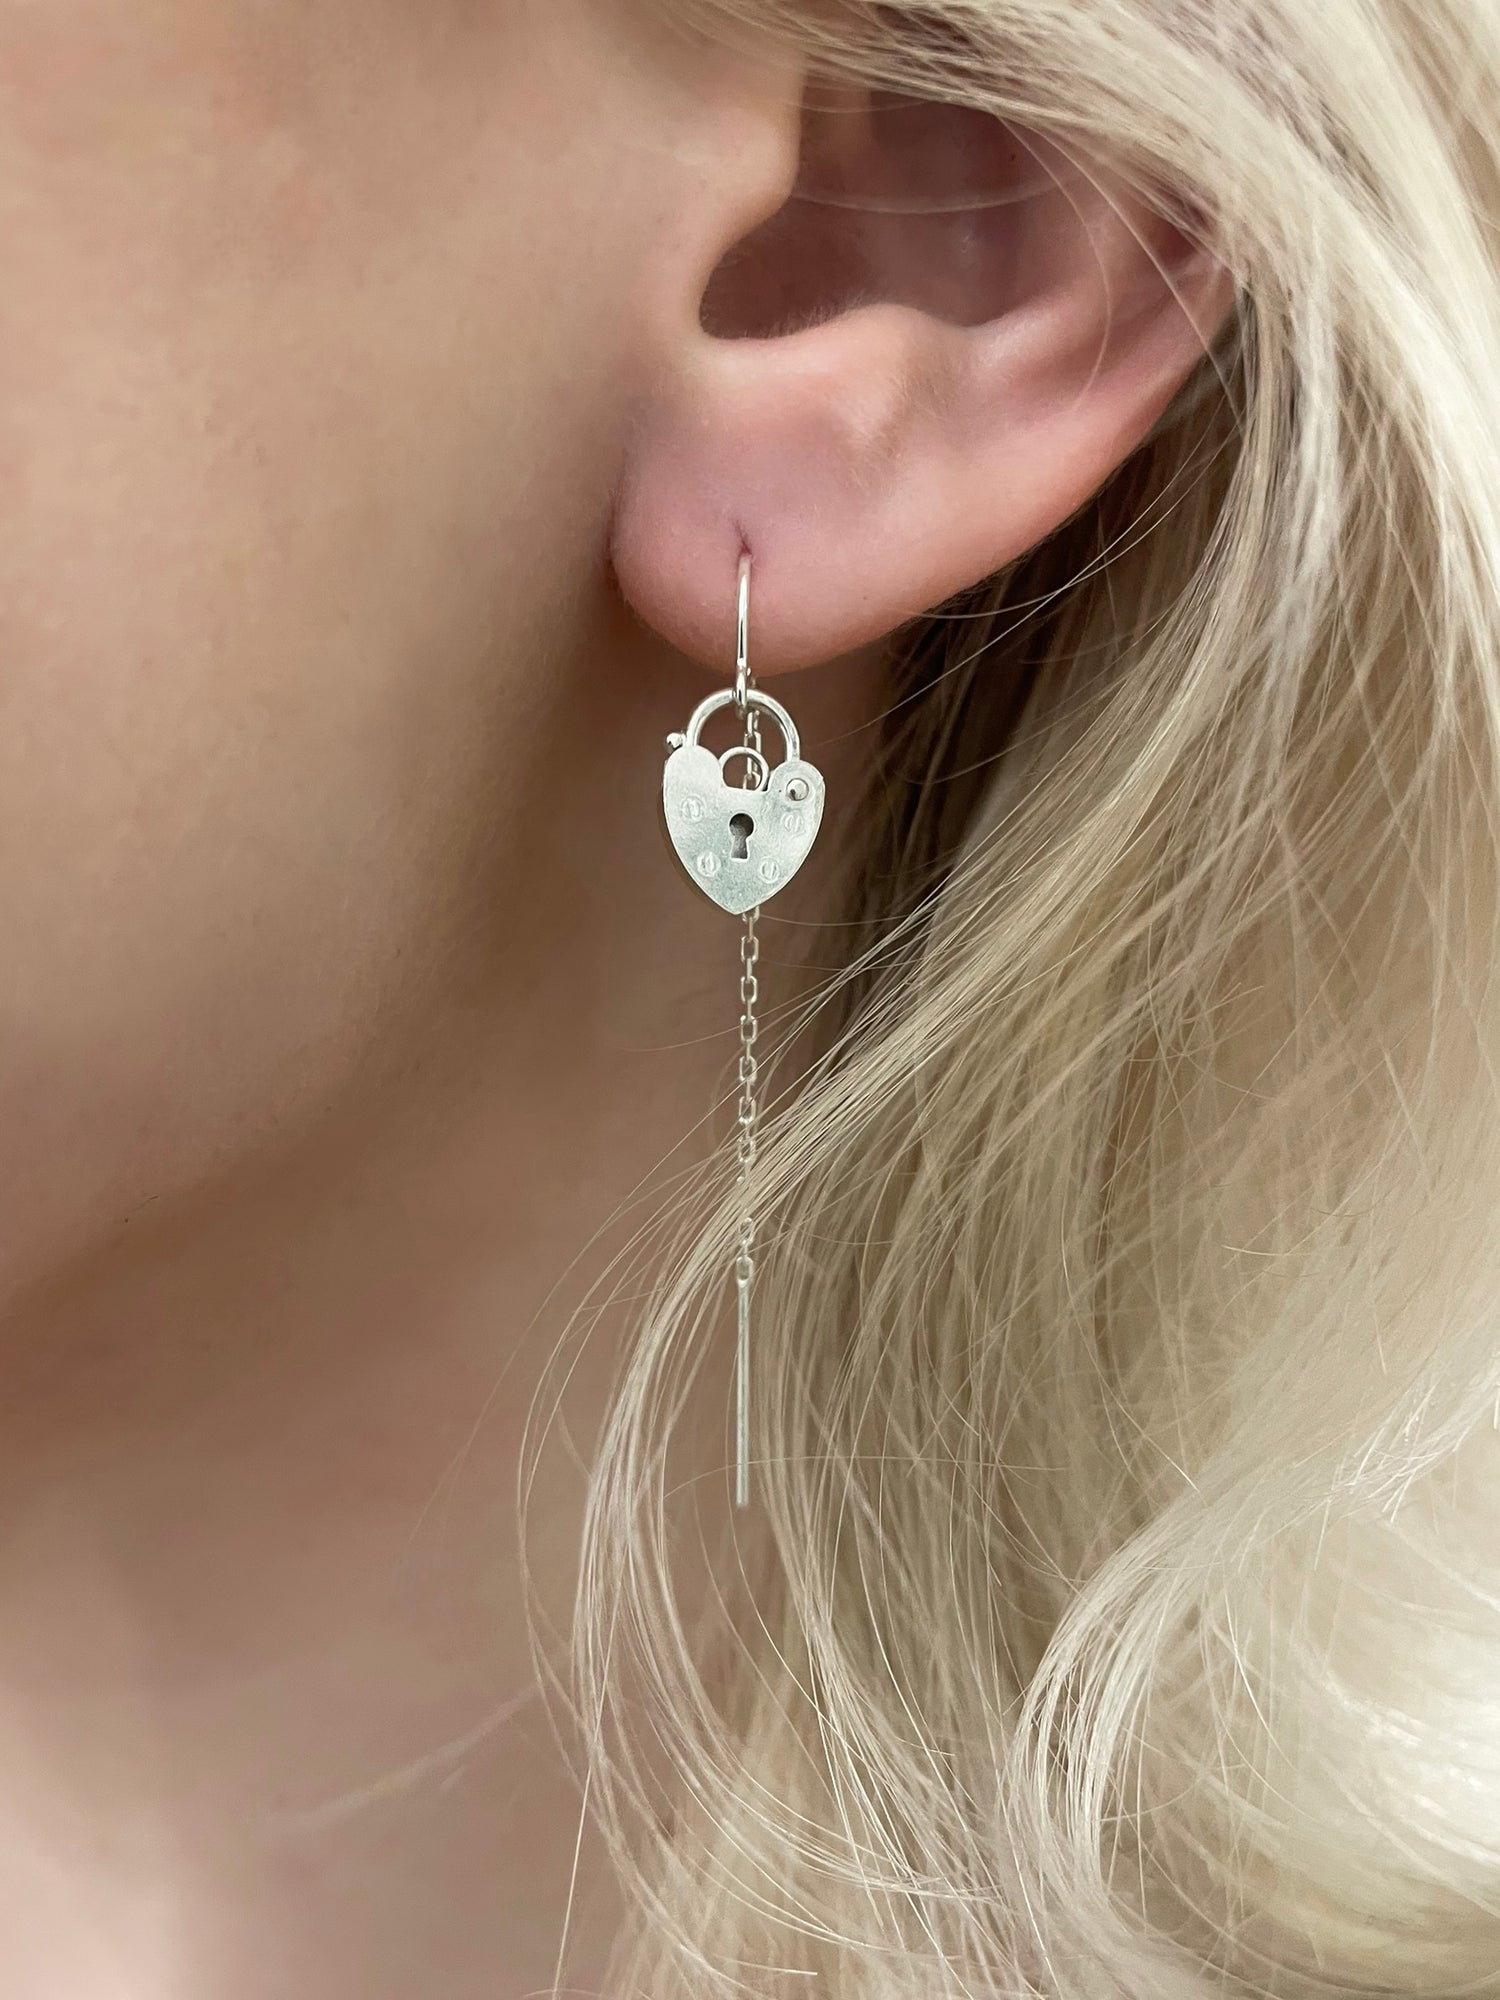 Tesoro padlock thread earrings, padlock earrings, earrings on model